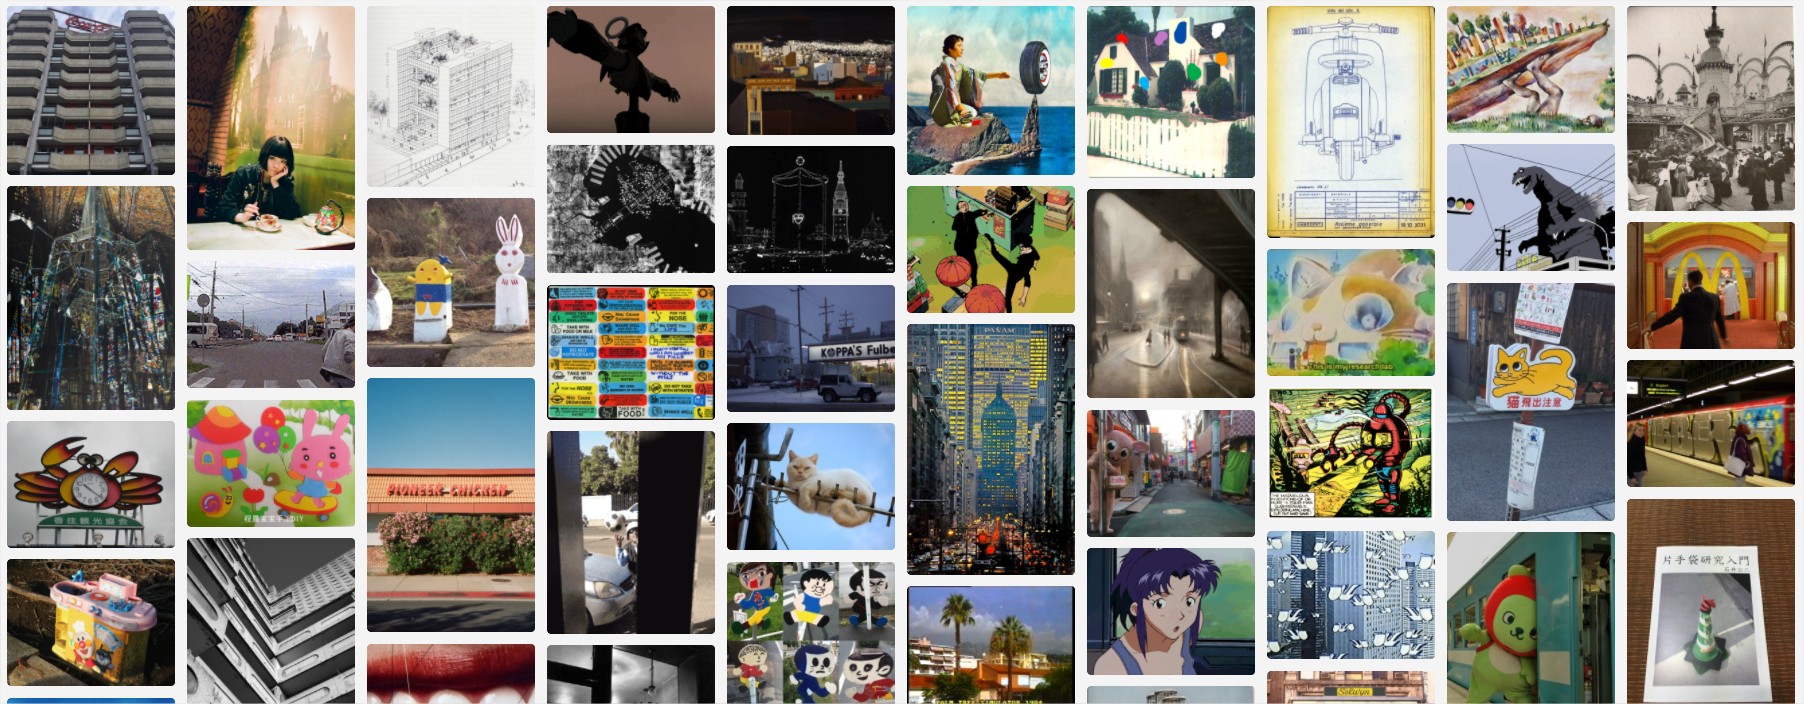 [pop-up] urbain Archive - Google Chrome